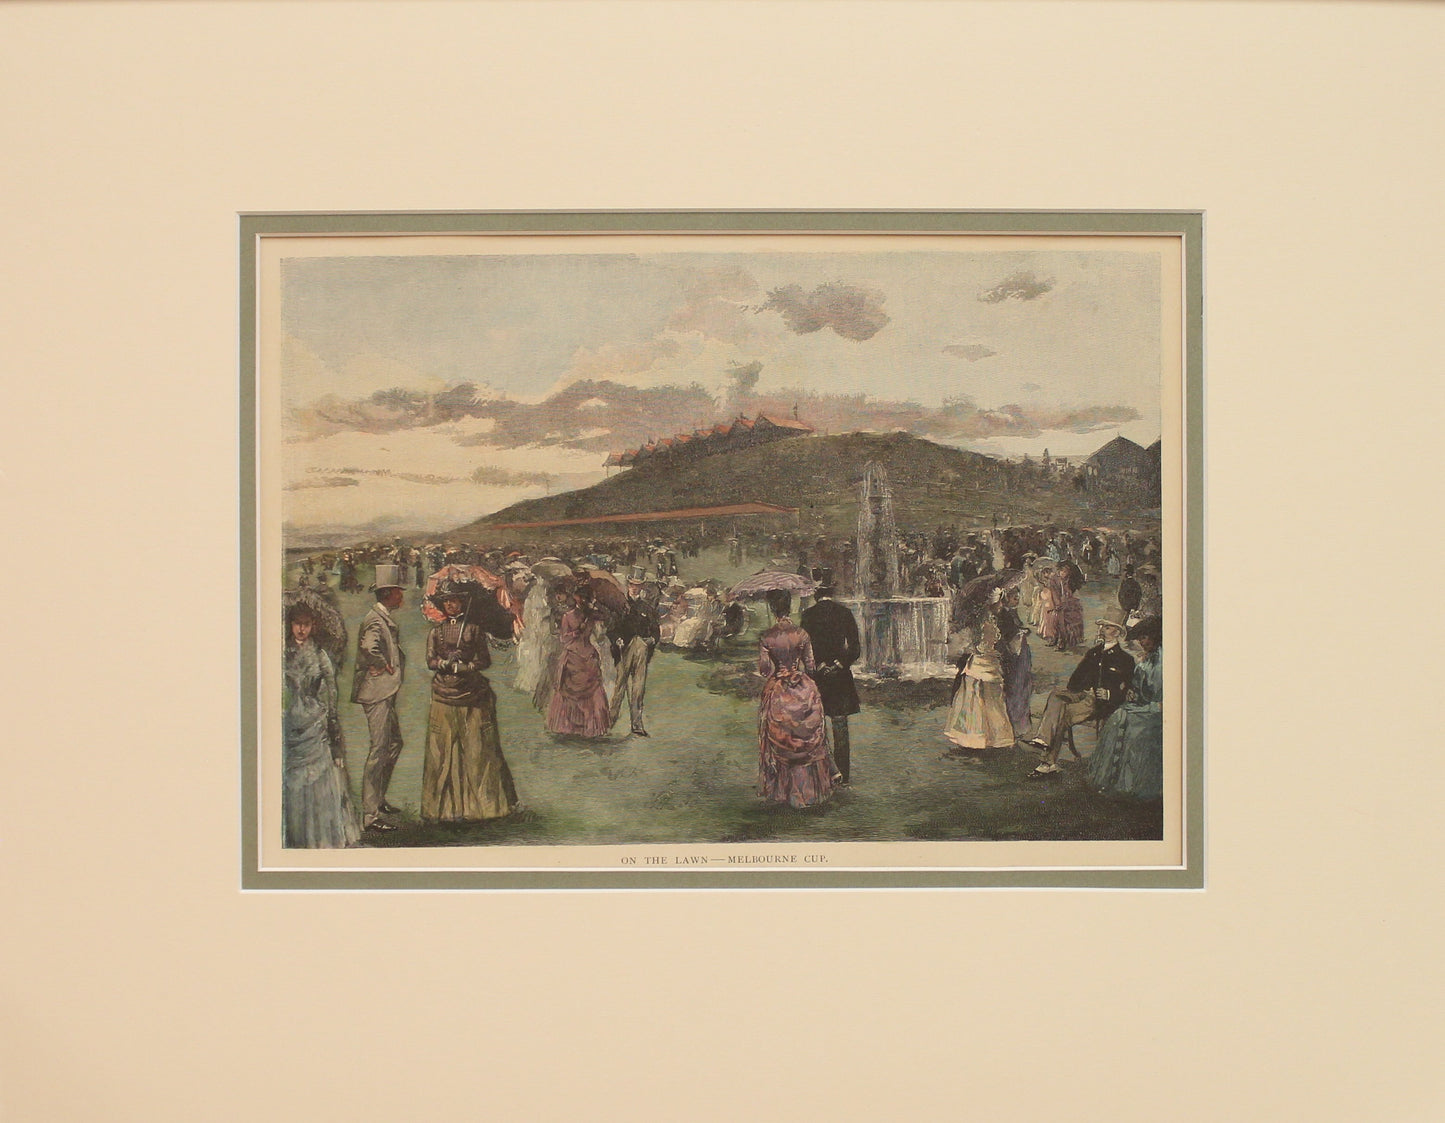 Australia, On the Lawn, Melbourne Cup, c1886